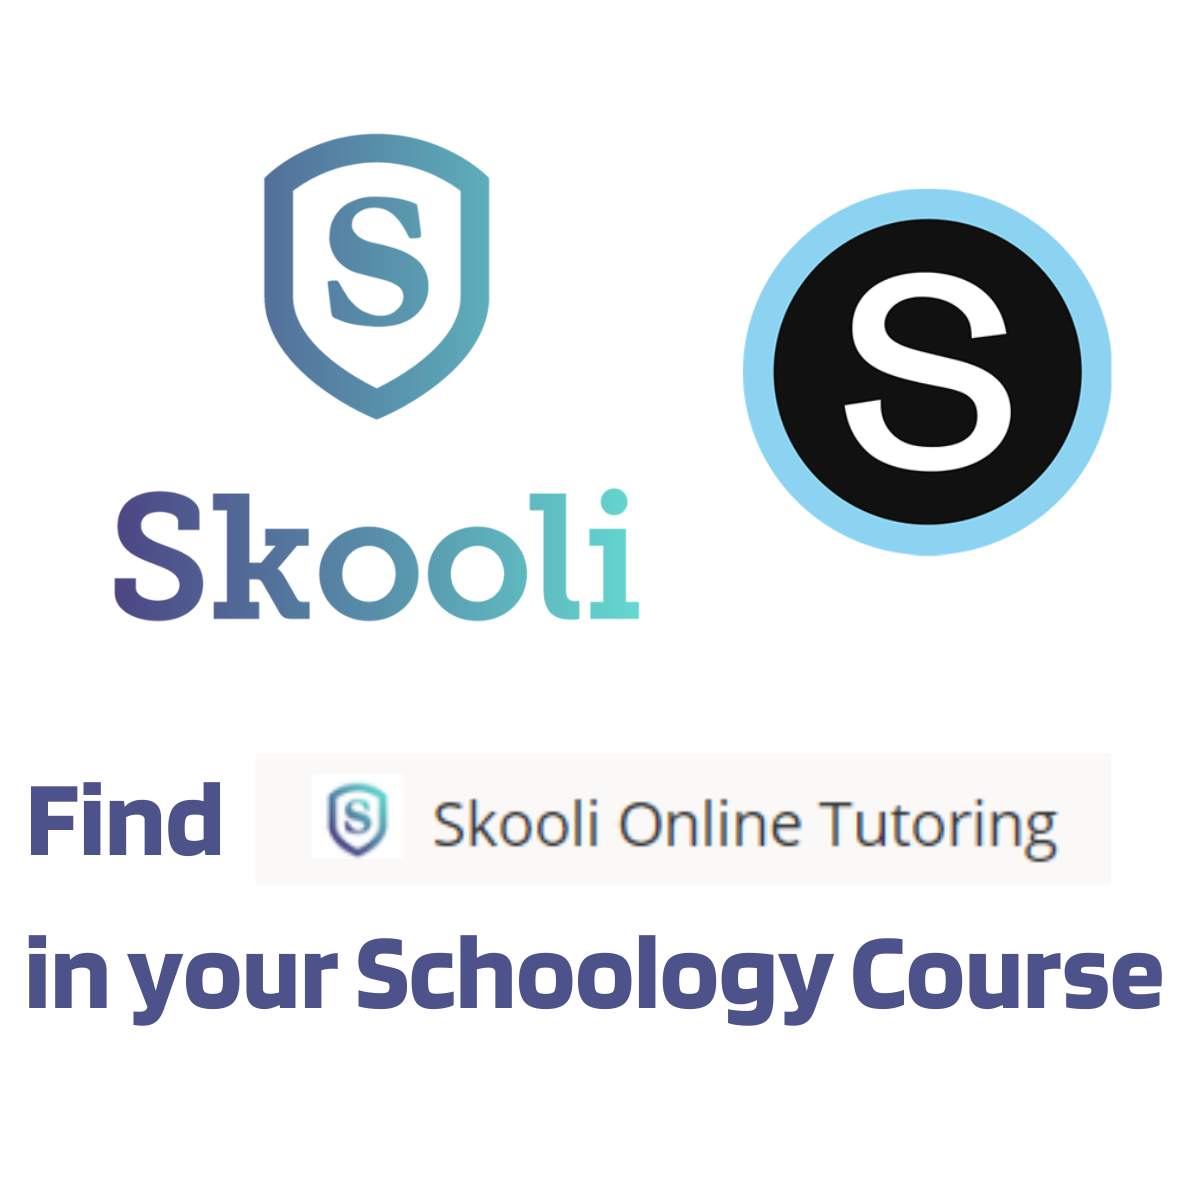 Skooli Online Tutoring for Students in Schoology